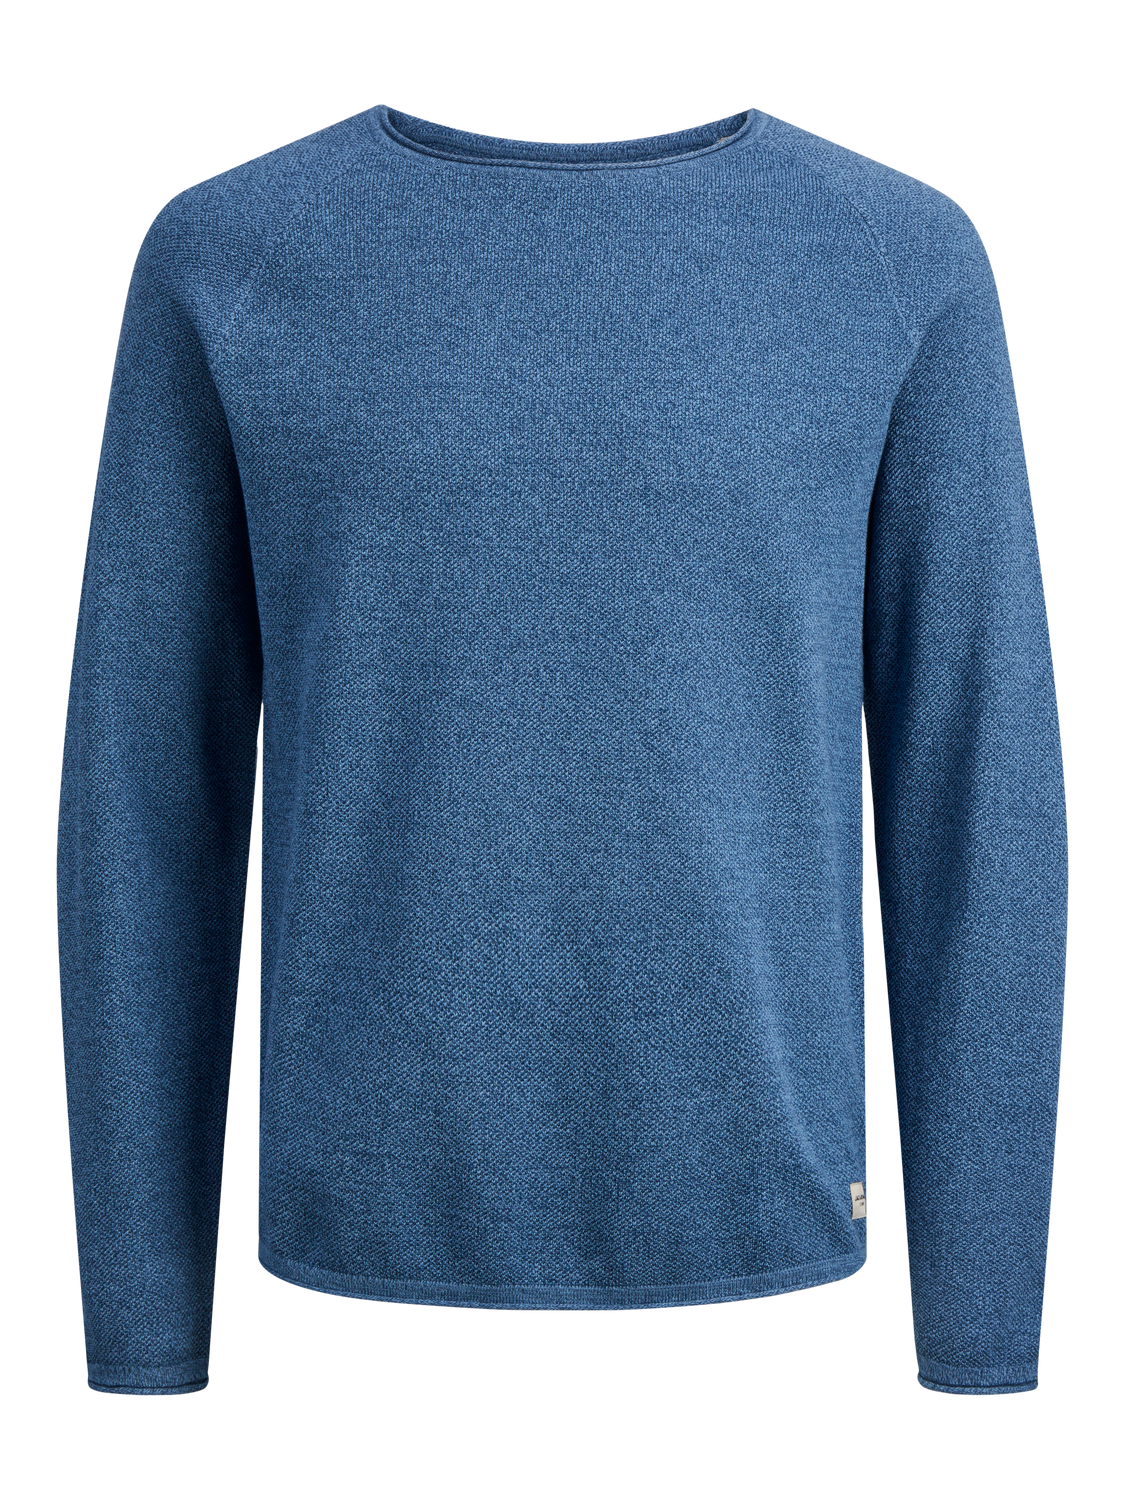 JJEHILL Pullover - mėlynas megztinis